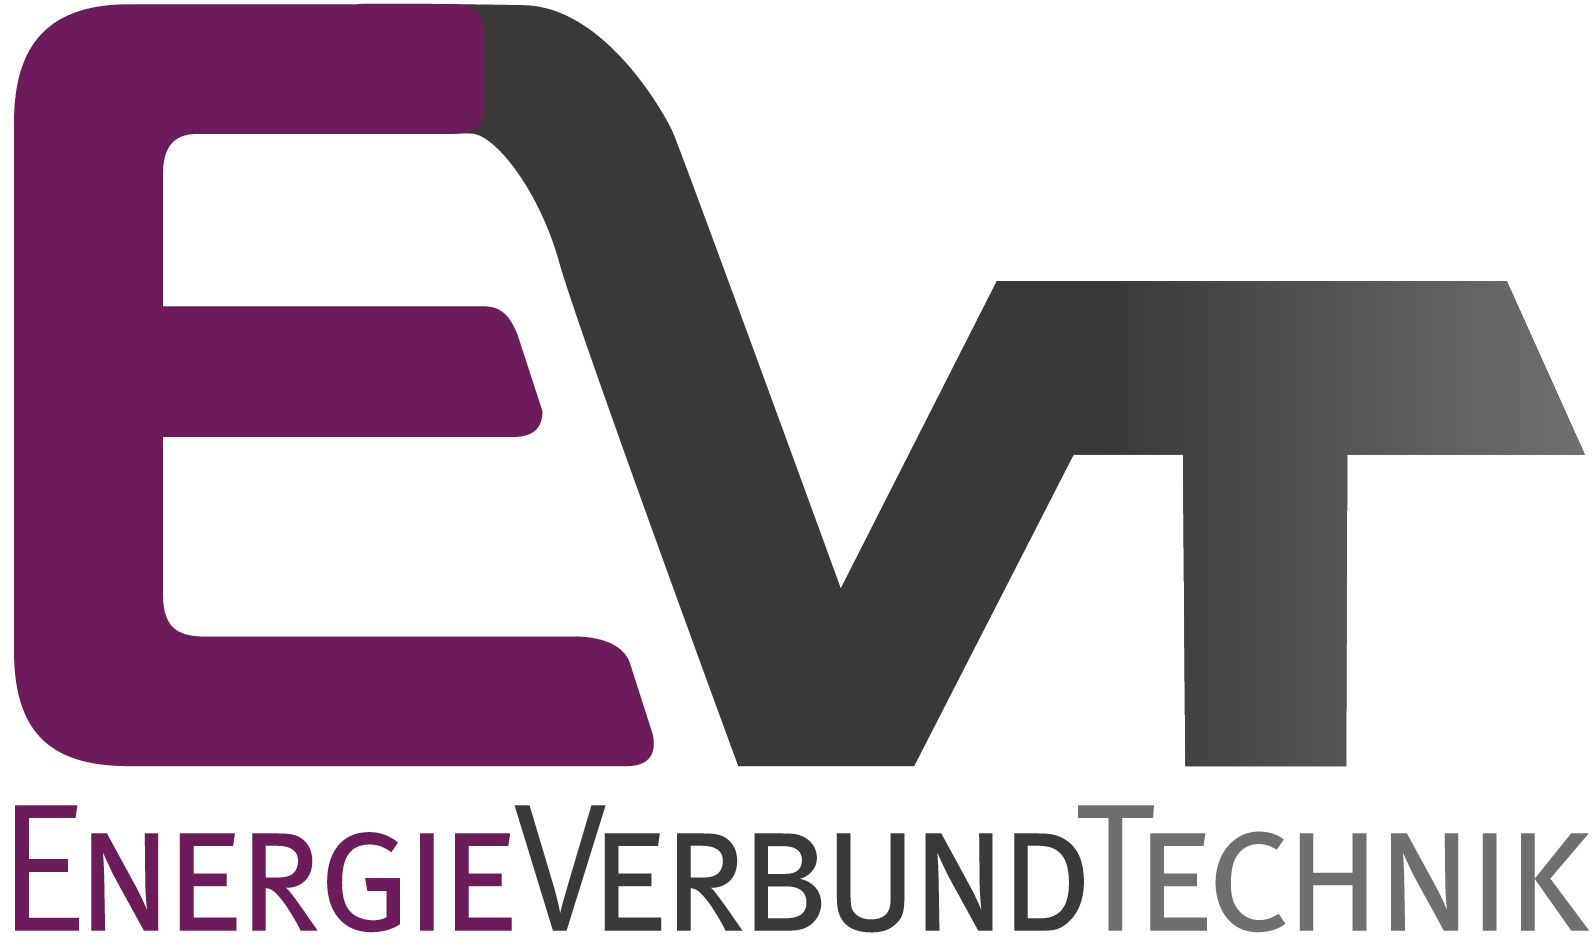 Featured image for “Institut für Energieverbundtechnik”